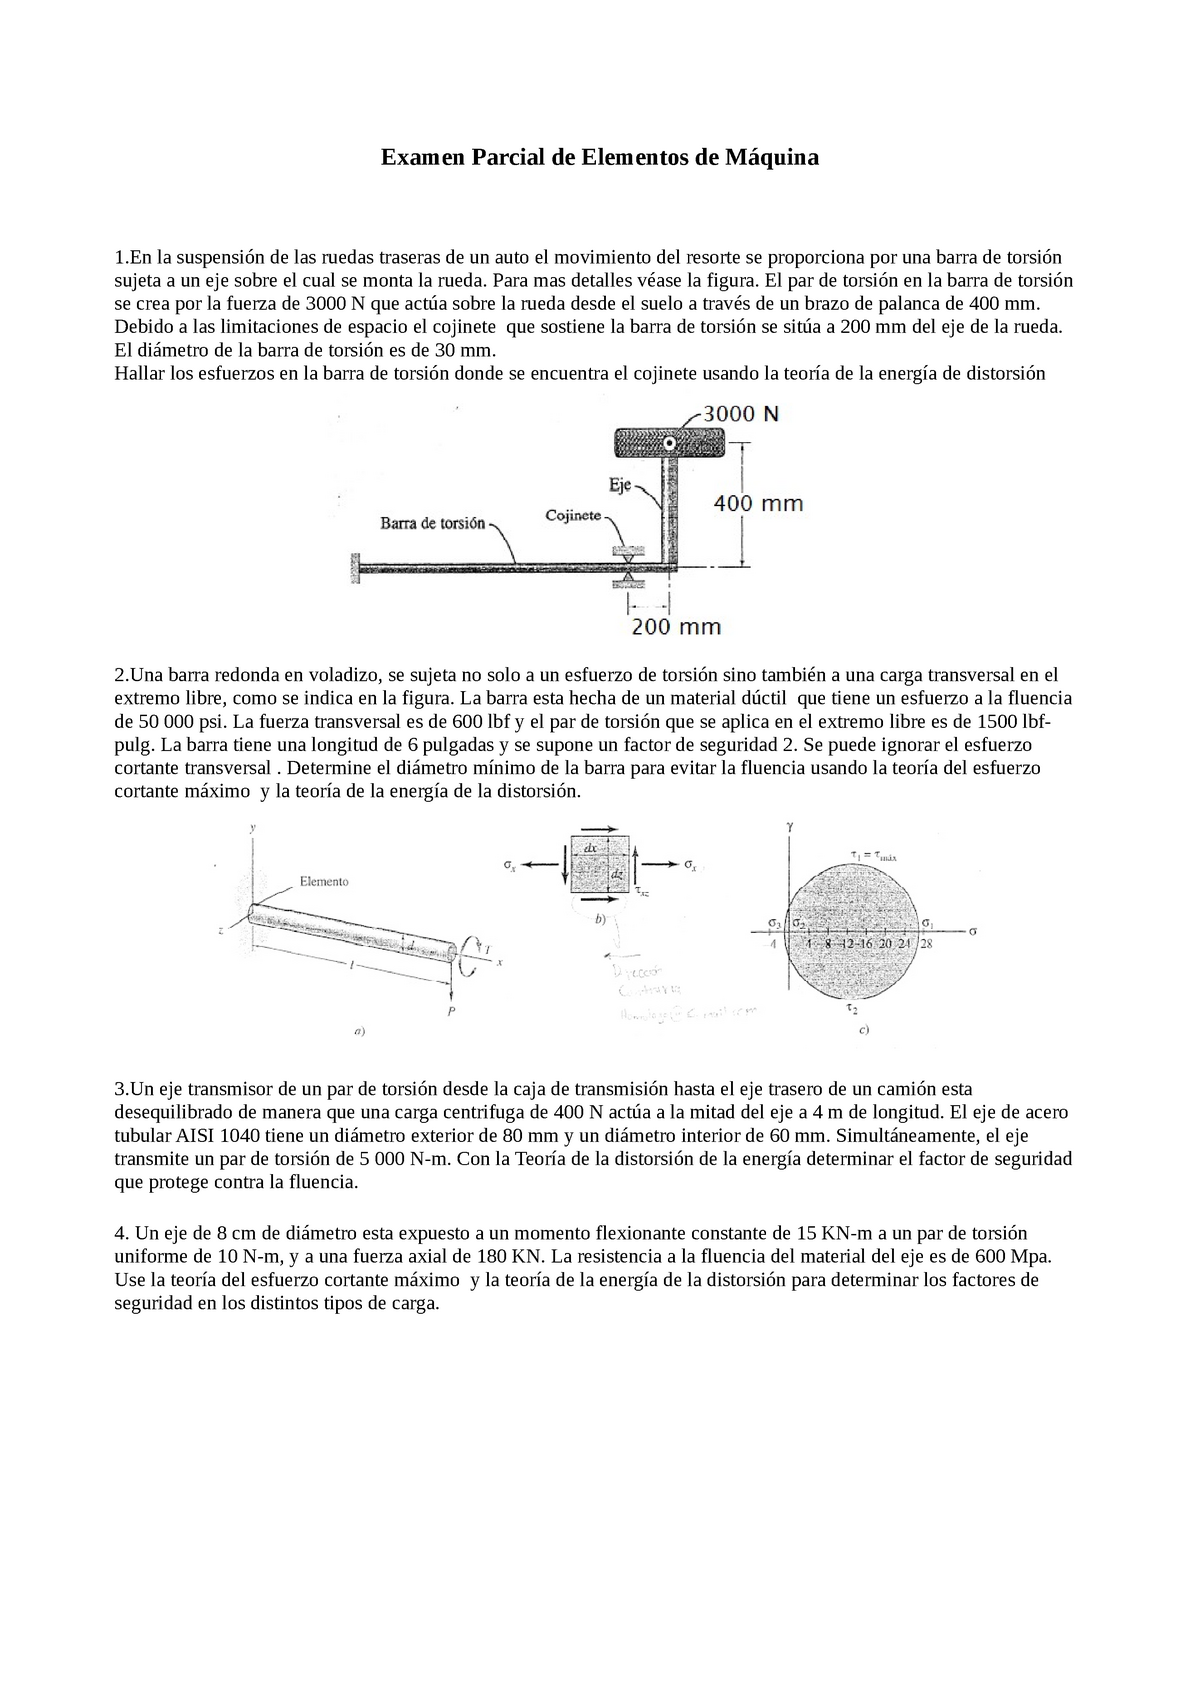 Examen Parcial Diseño De Elementos De Maquina Examen Parcial De Elementos De Máquina Bernard 7925